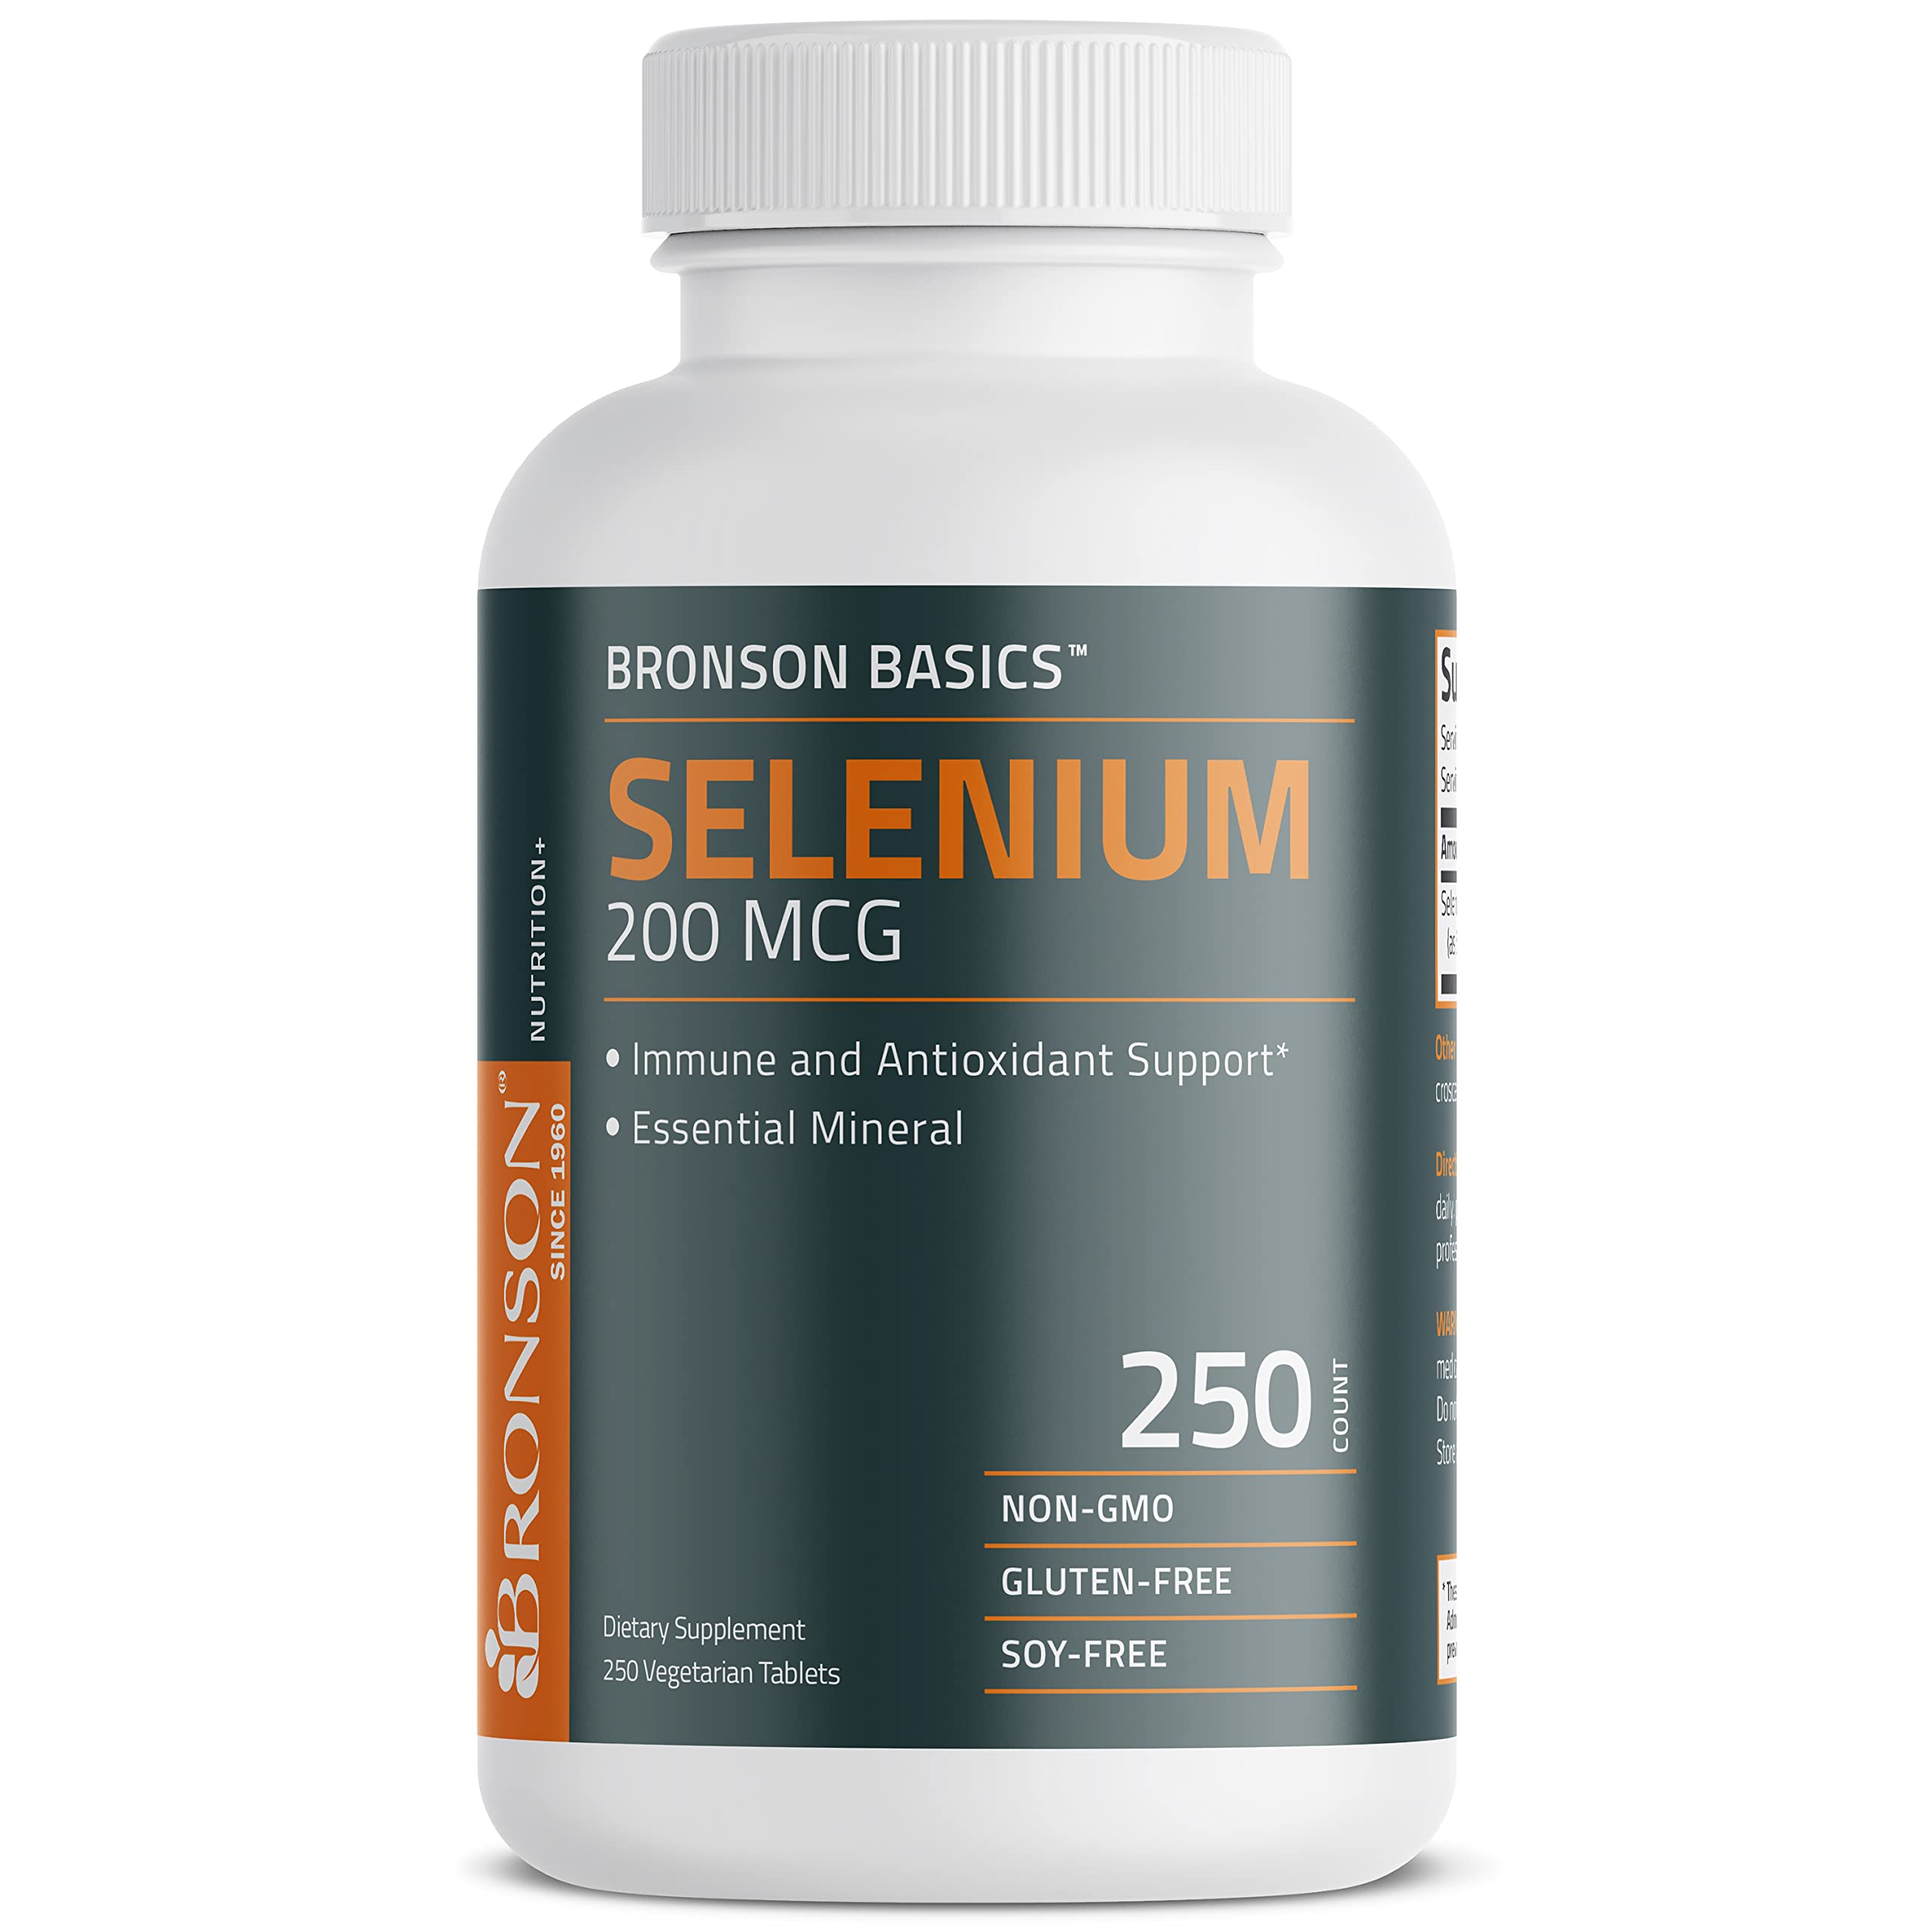 Selenium 200 mcg, 250 Vegetarian Tablets view 3 of 6